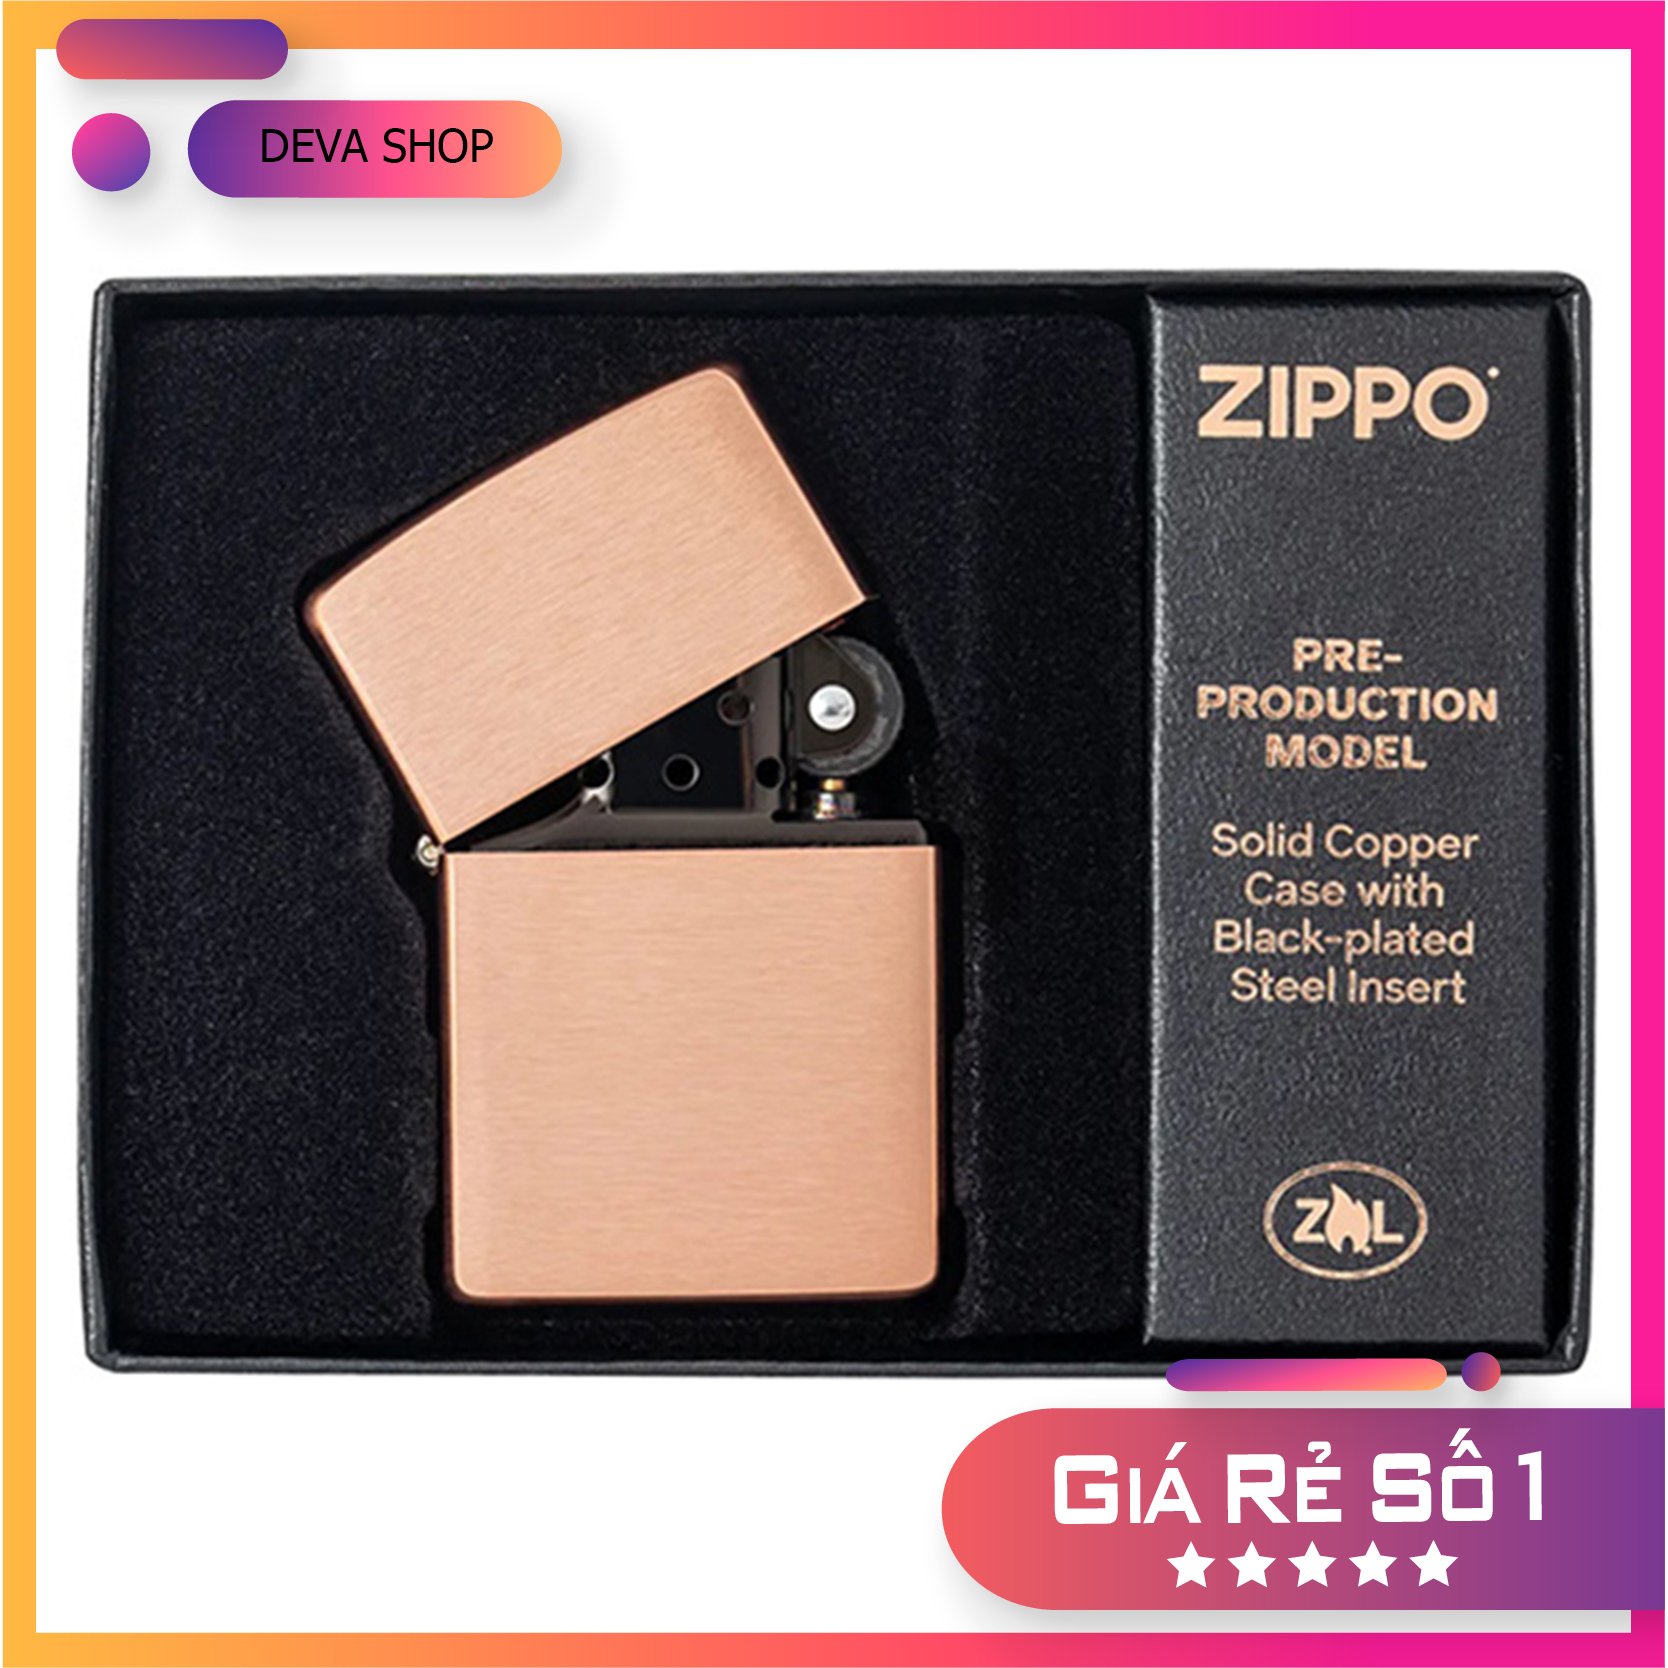 Bật lửa, hộp quẹt Zippo Solid Copper – Đồng đỏ 2022 mã Z201 DEVA SHOP